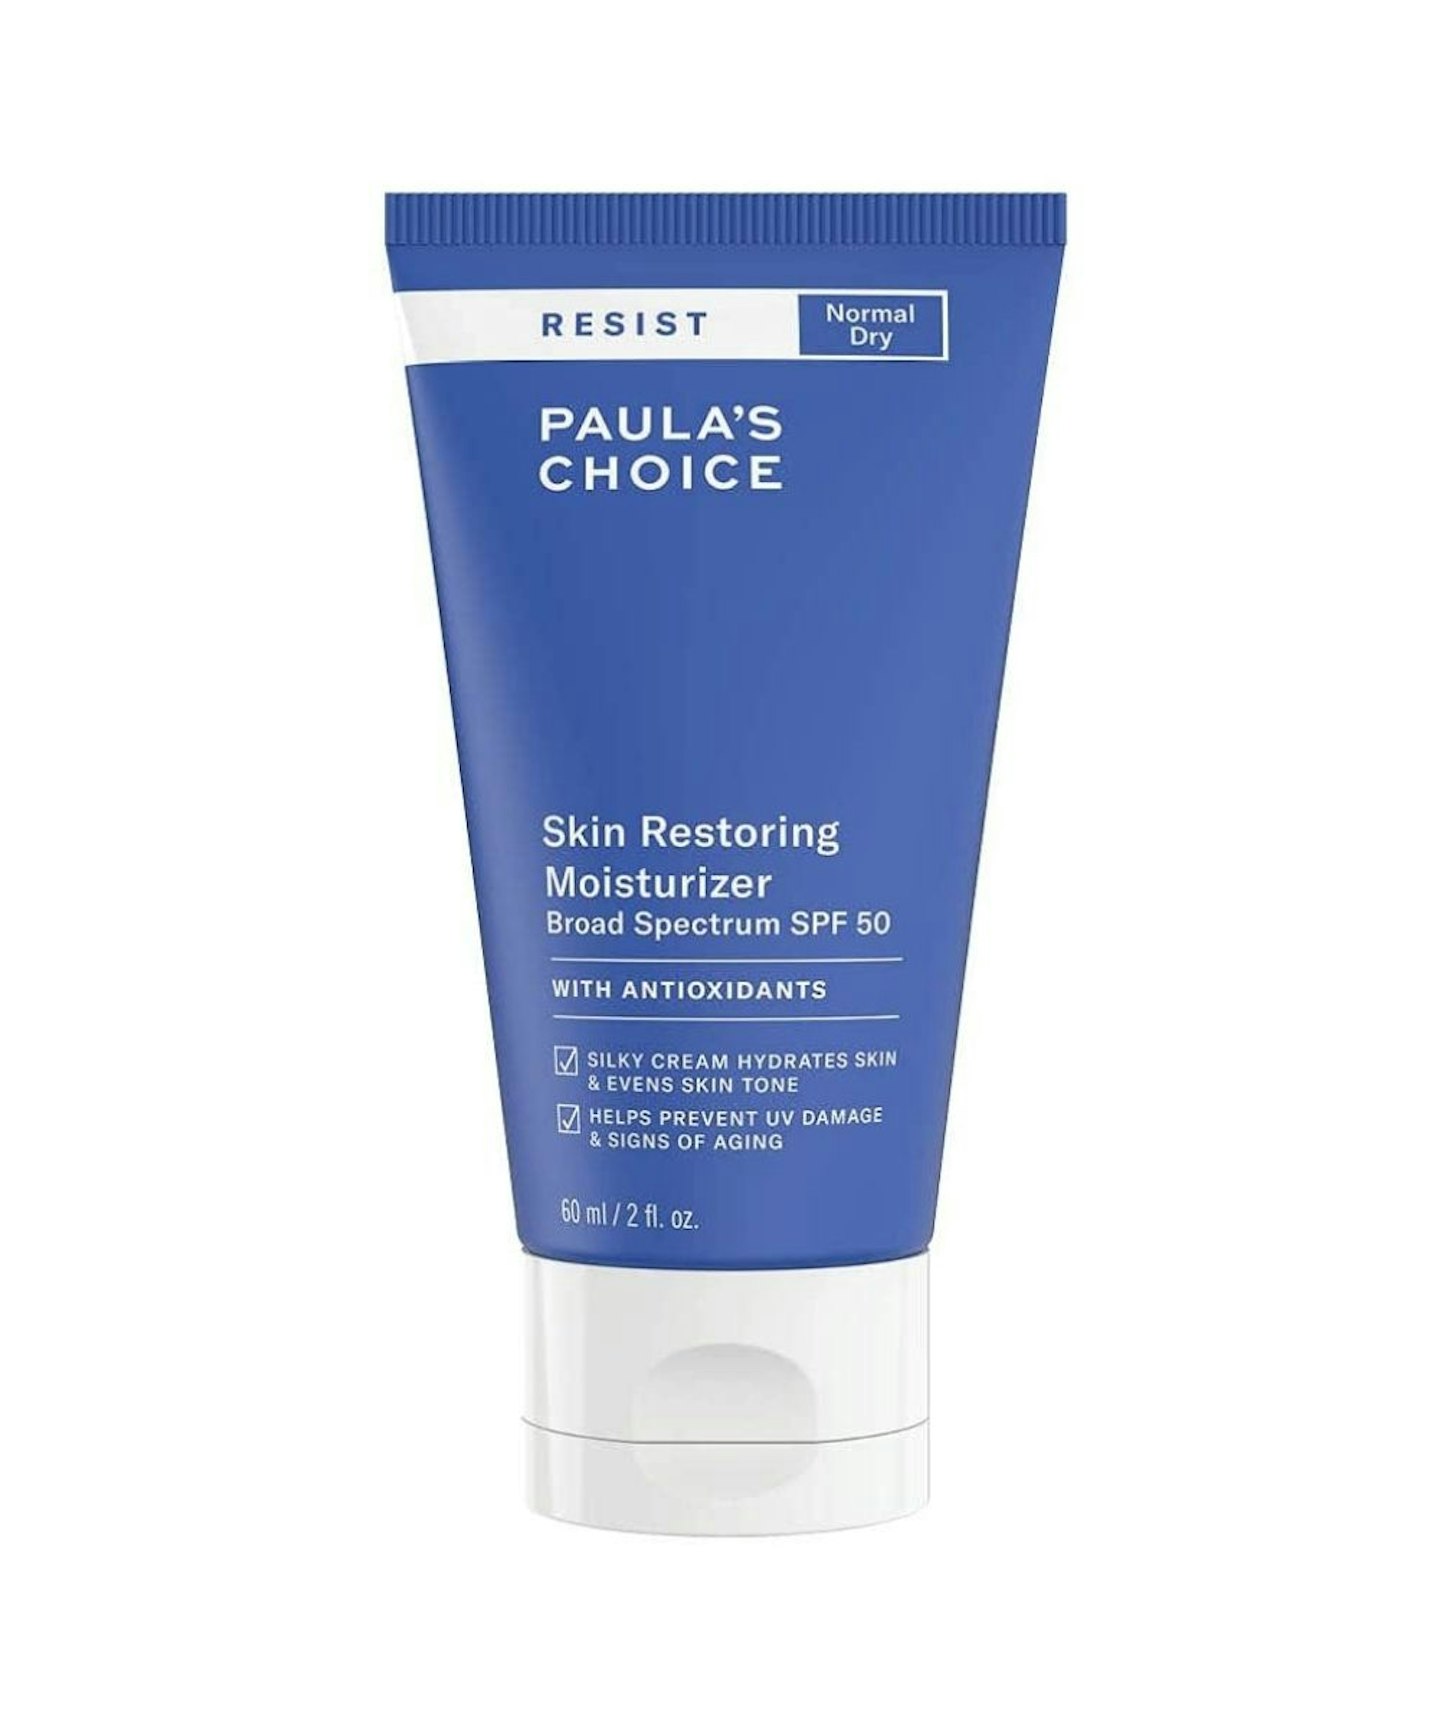 Paula's Choice Resist Anti-Aging Skin Restoring Moisturiser SPF 50